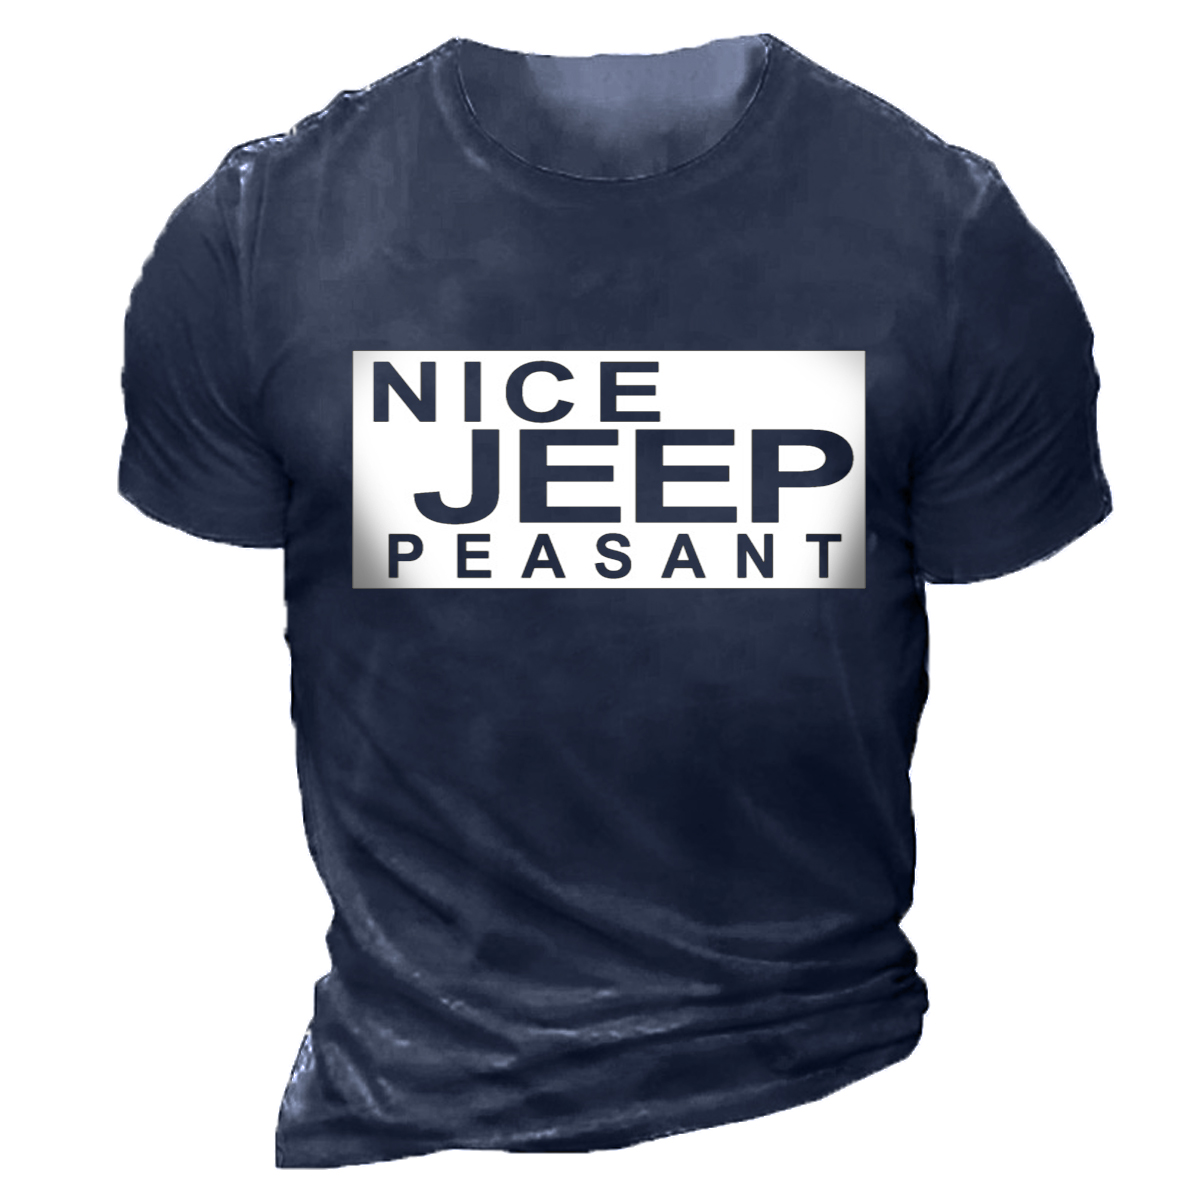 Men's Retro Nice Jeep Chic Peasant Round Neck Short Sleeve T-shirt